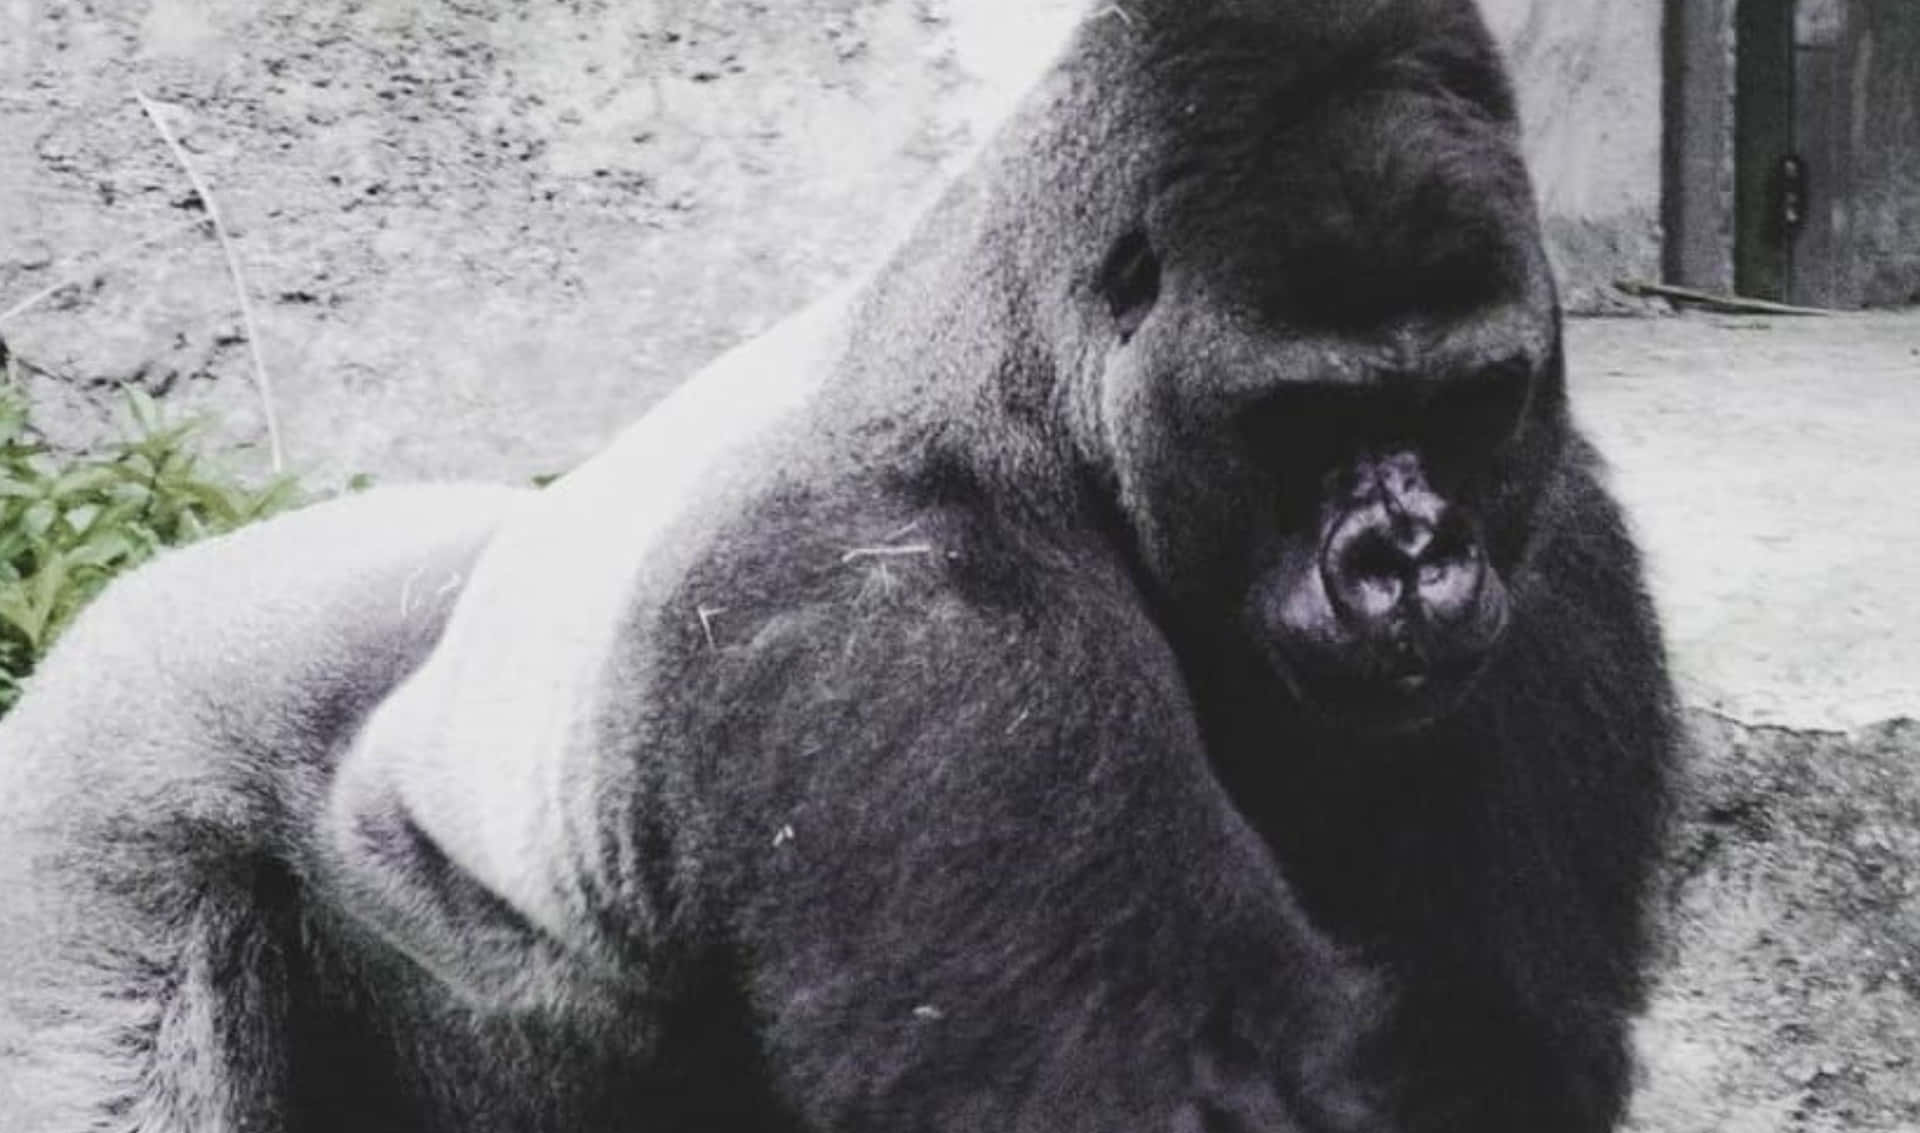 Close-up portrait of a Gorilla